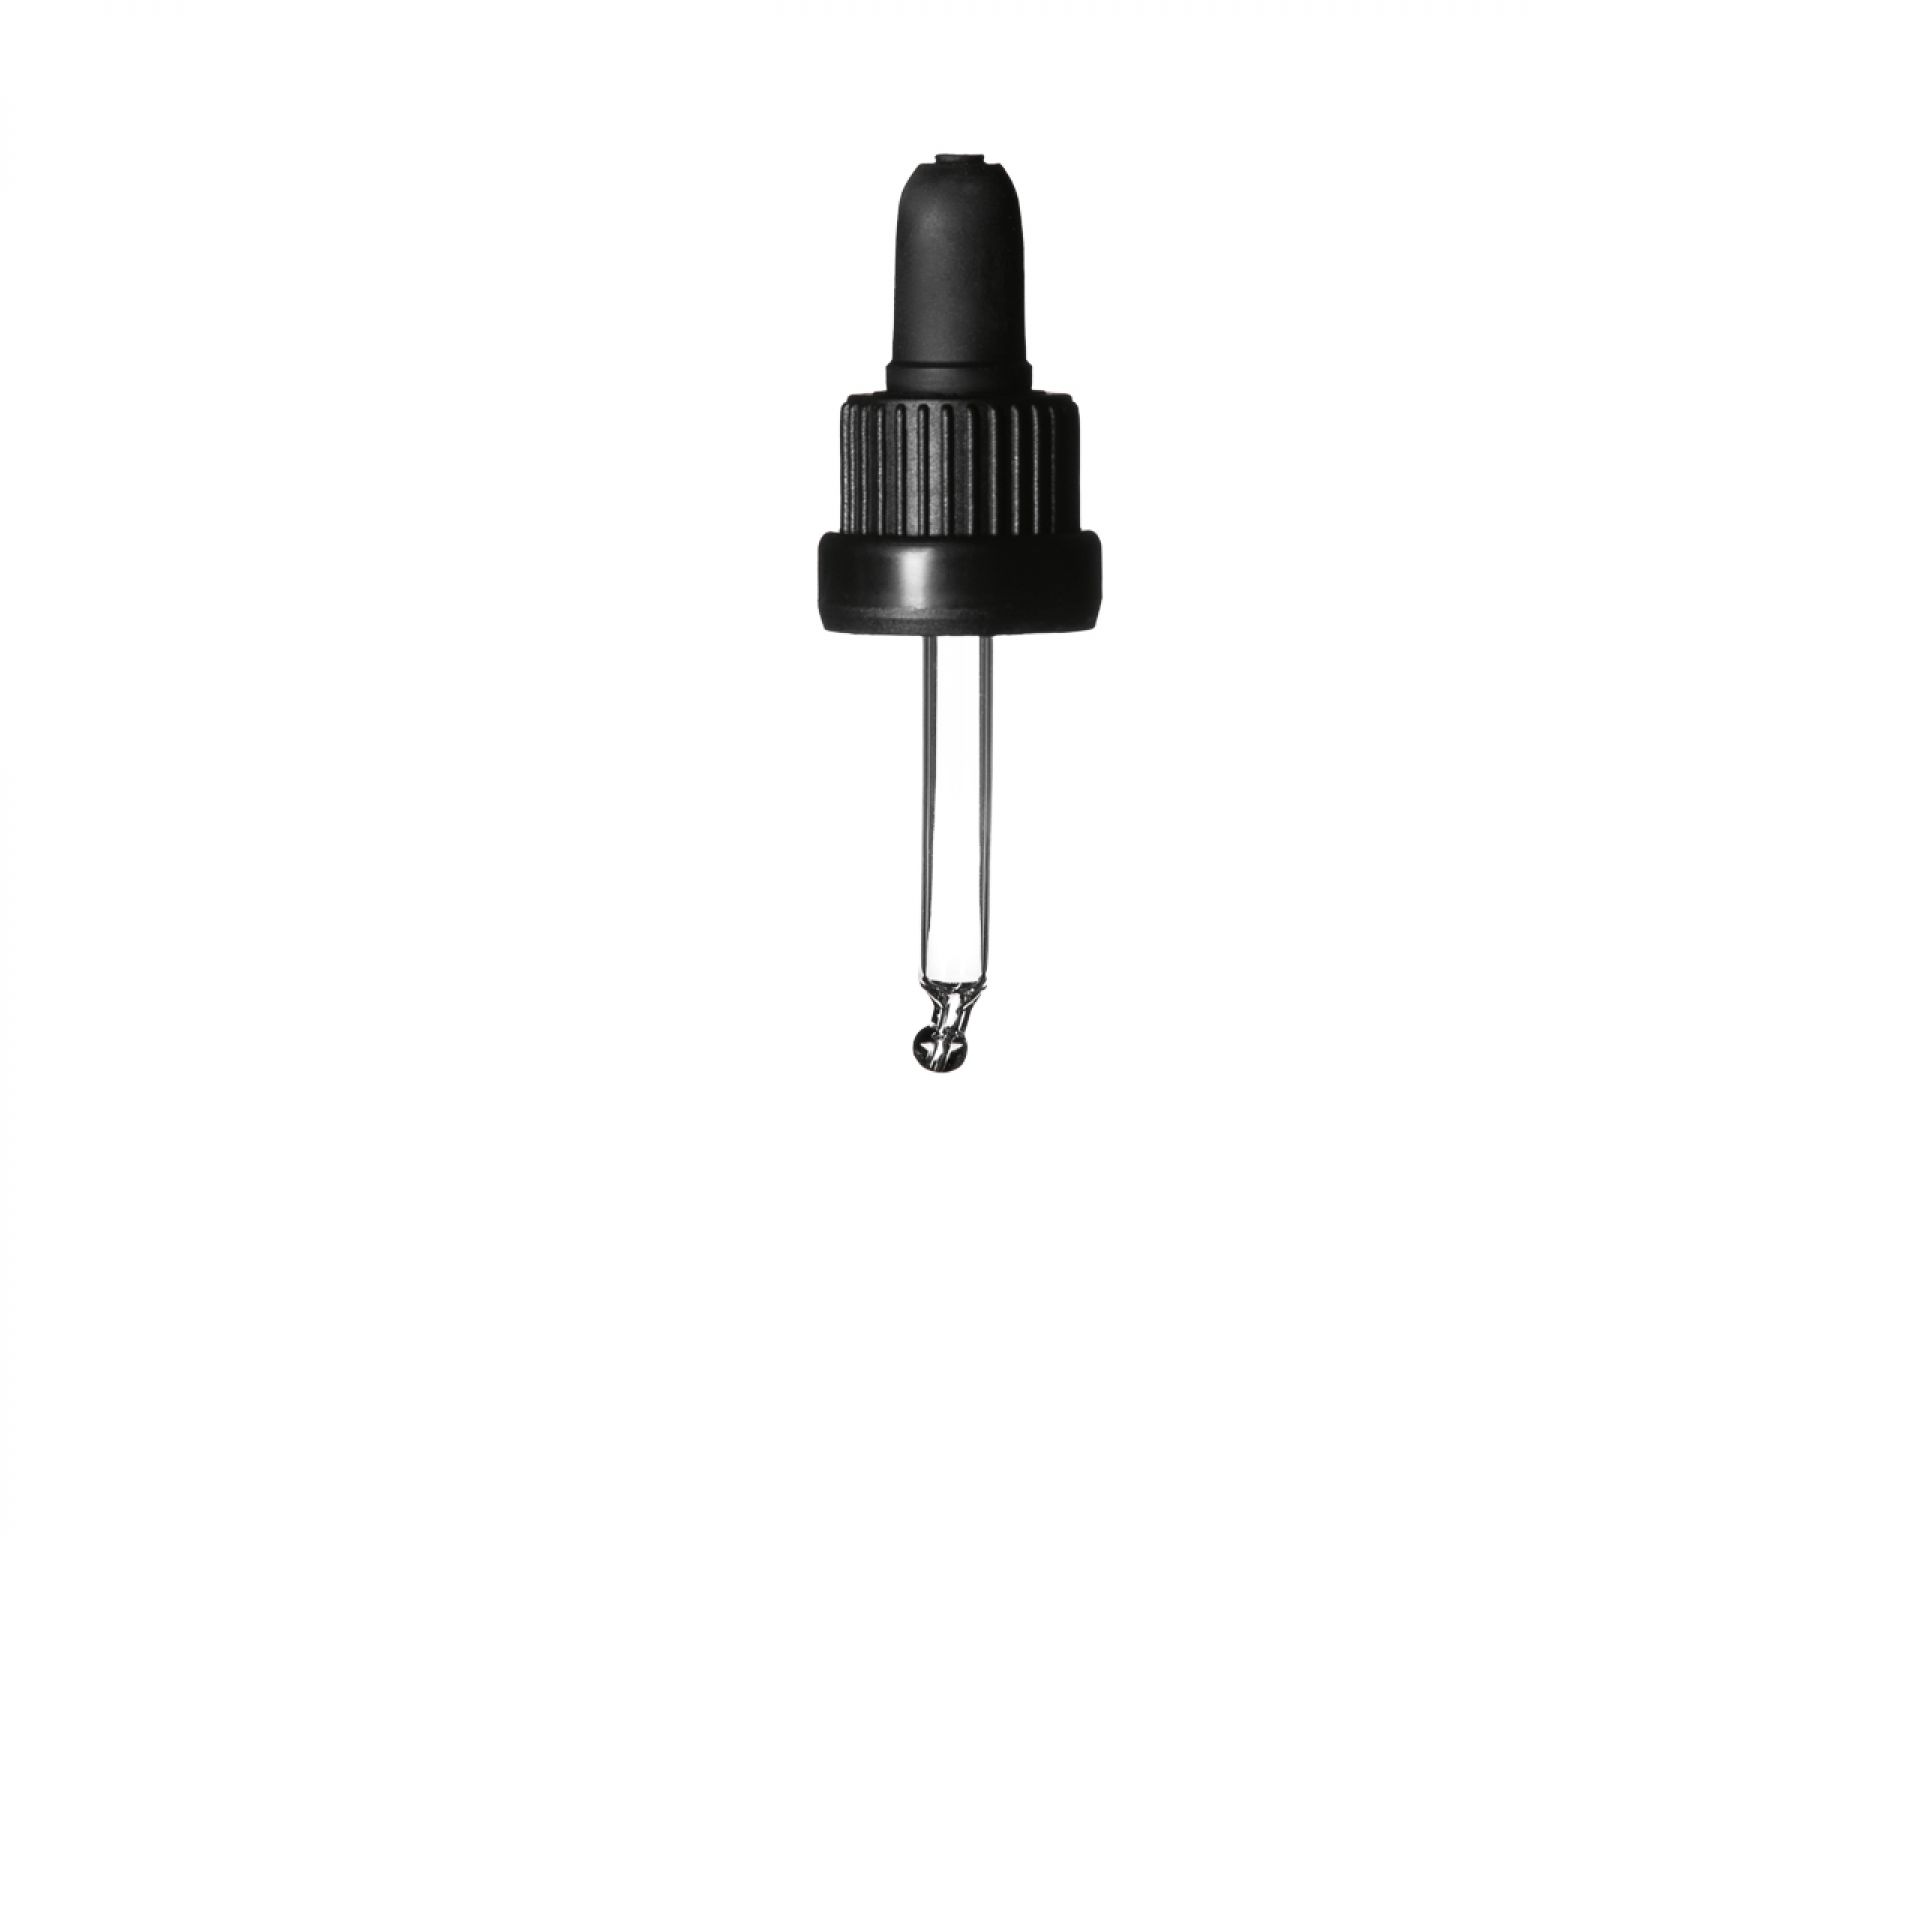 Pipette tamper evident DIN18, III, black, ribbed, bulb TPE, dose 0.7ml, bent ball tip (Orion 10-63)